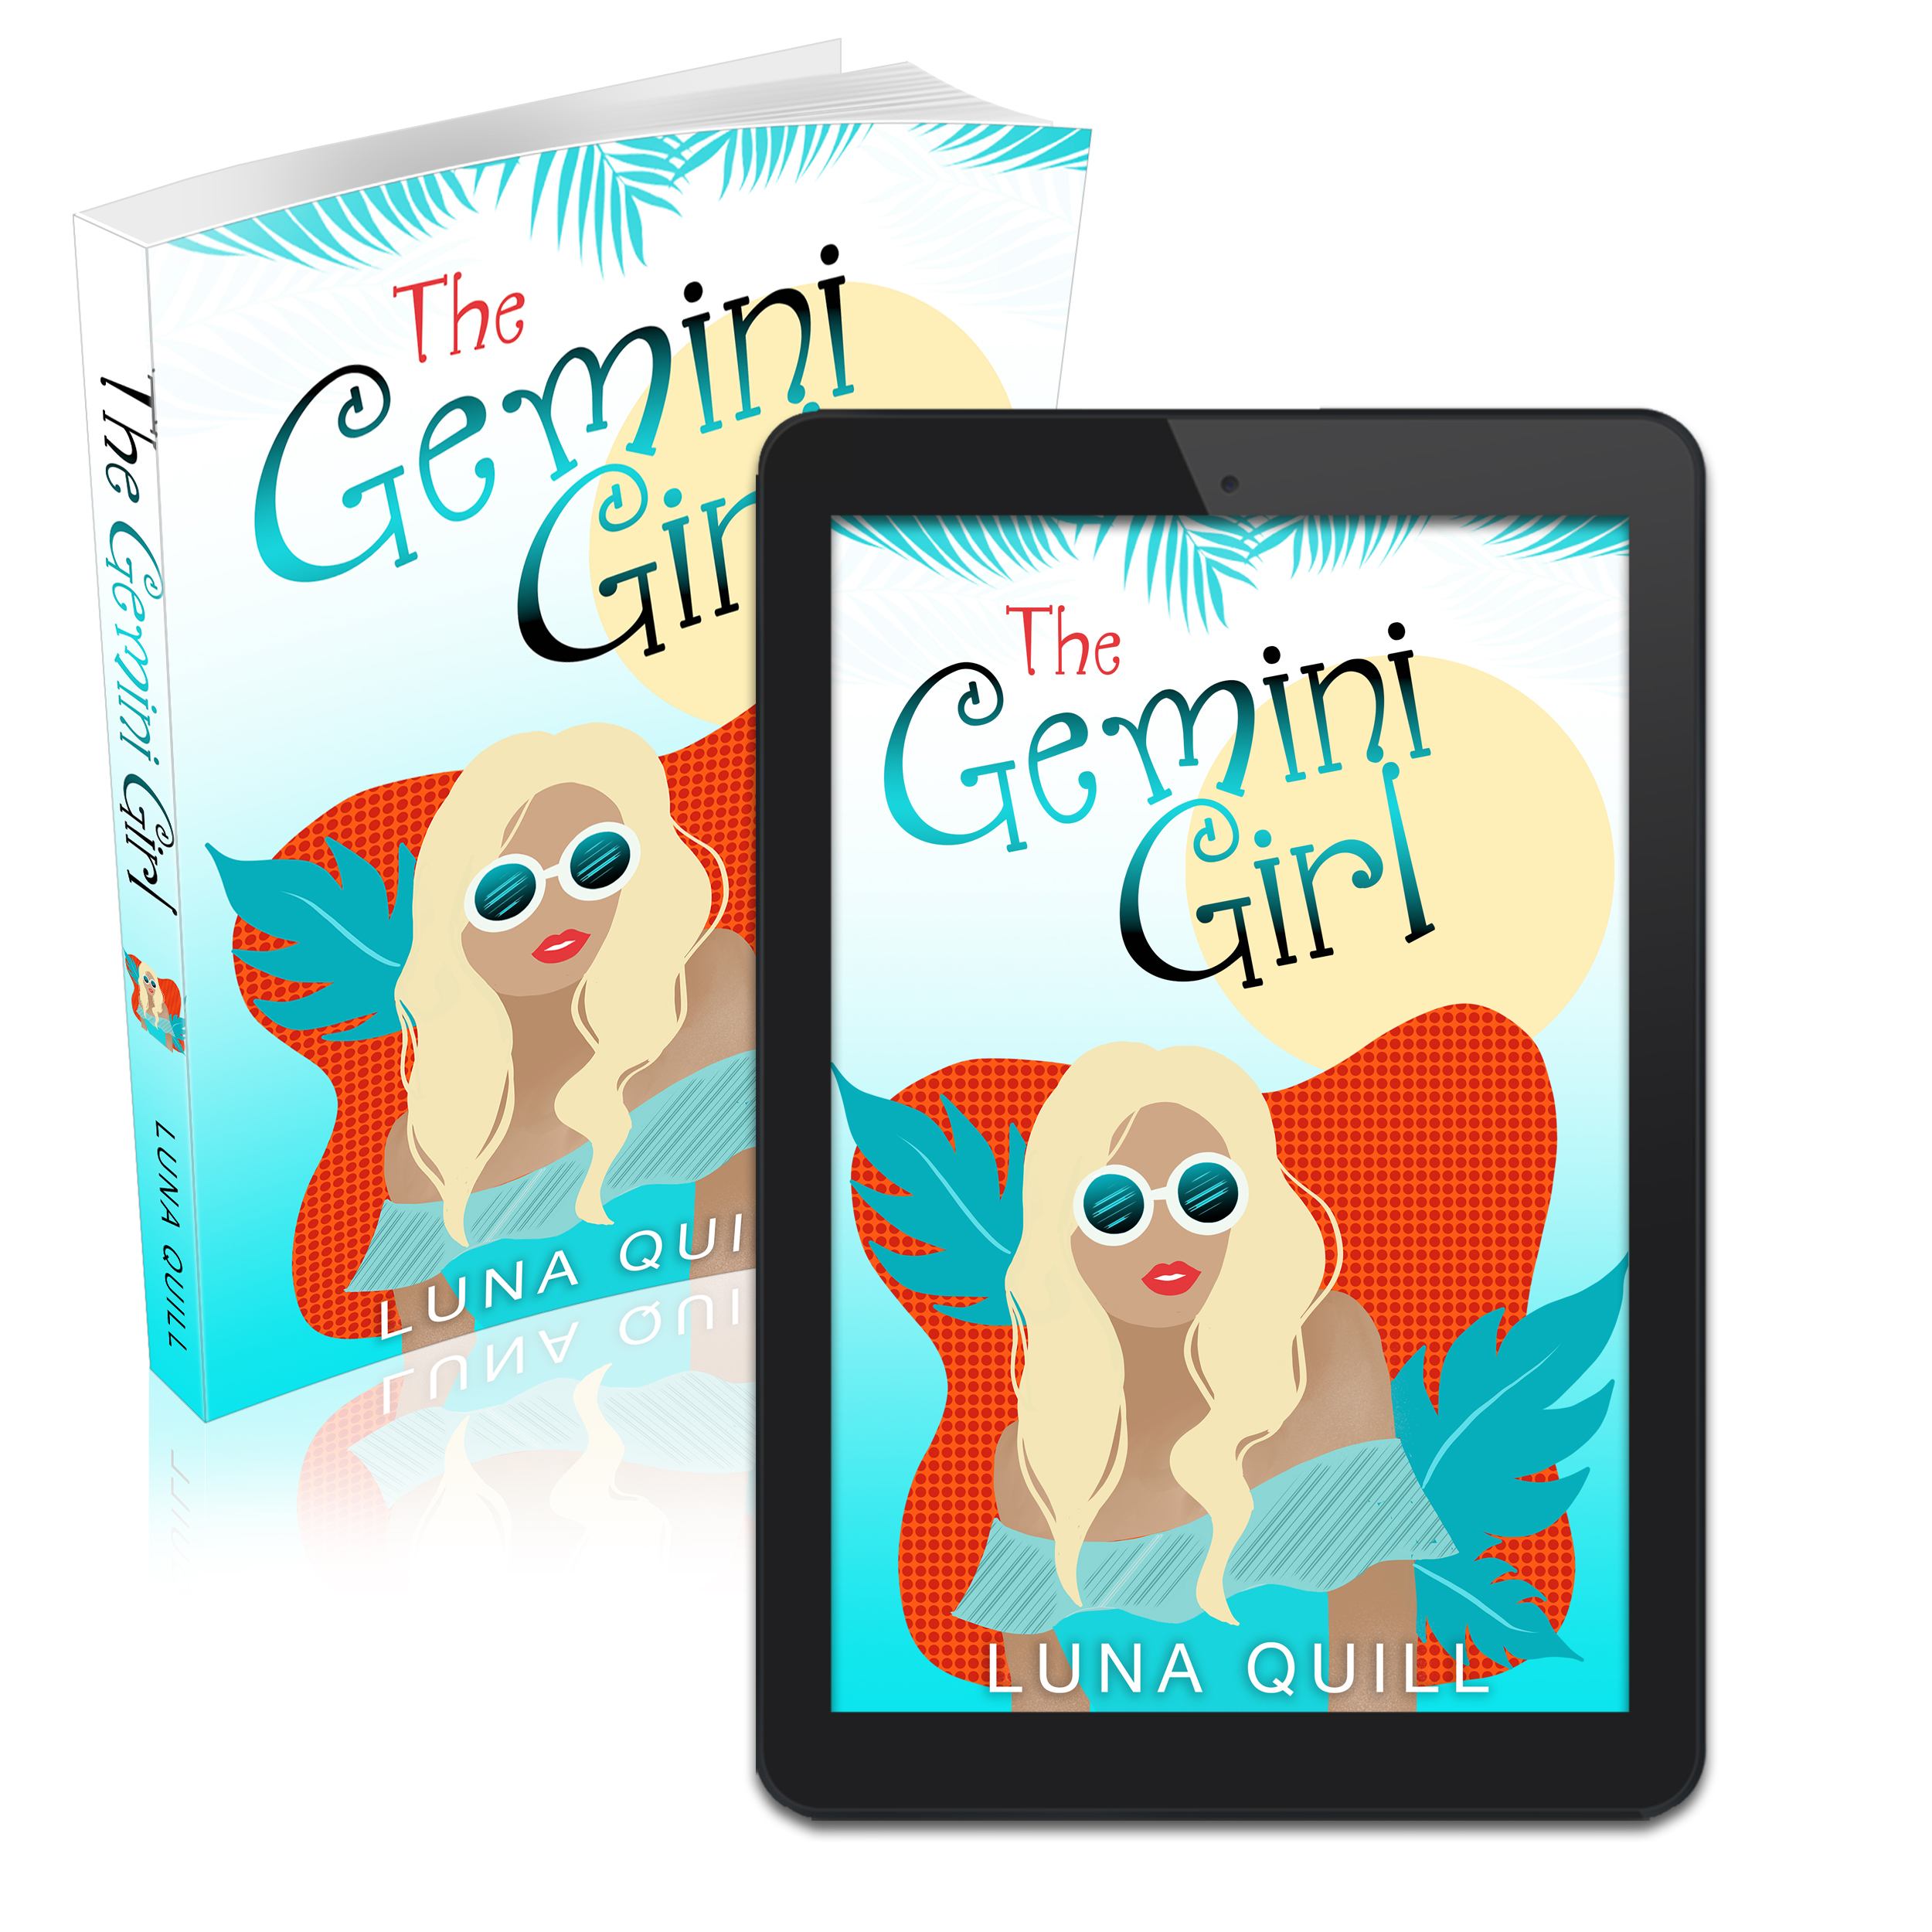 The Gemini Girl premade book cover